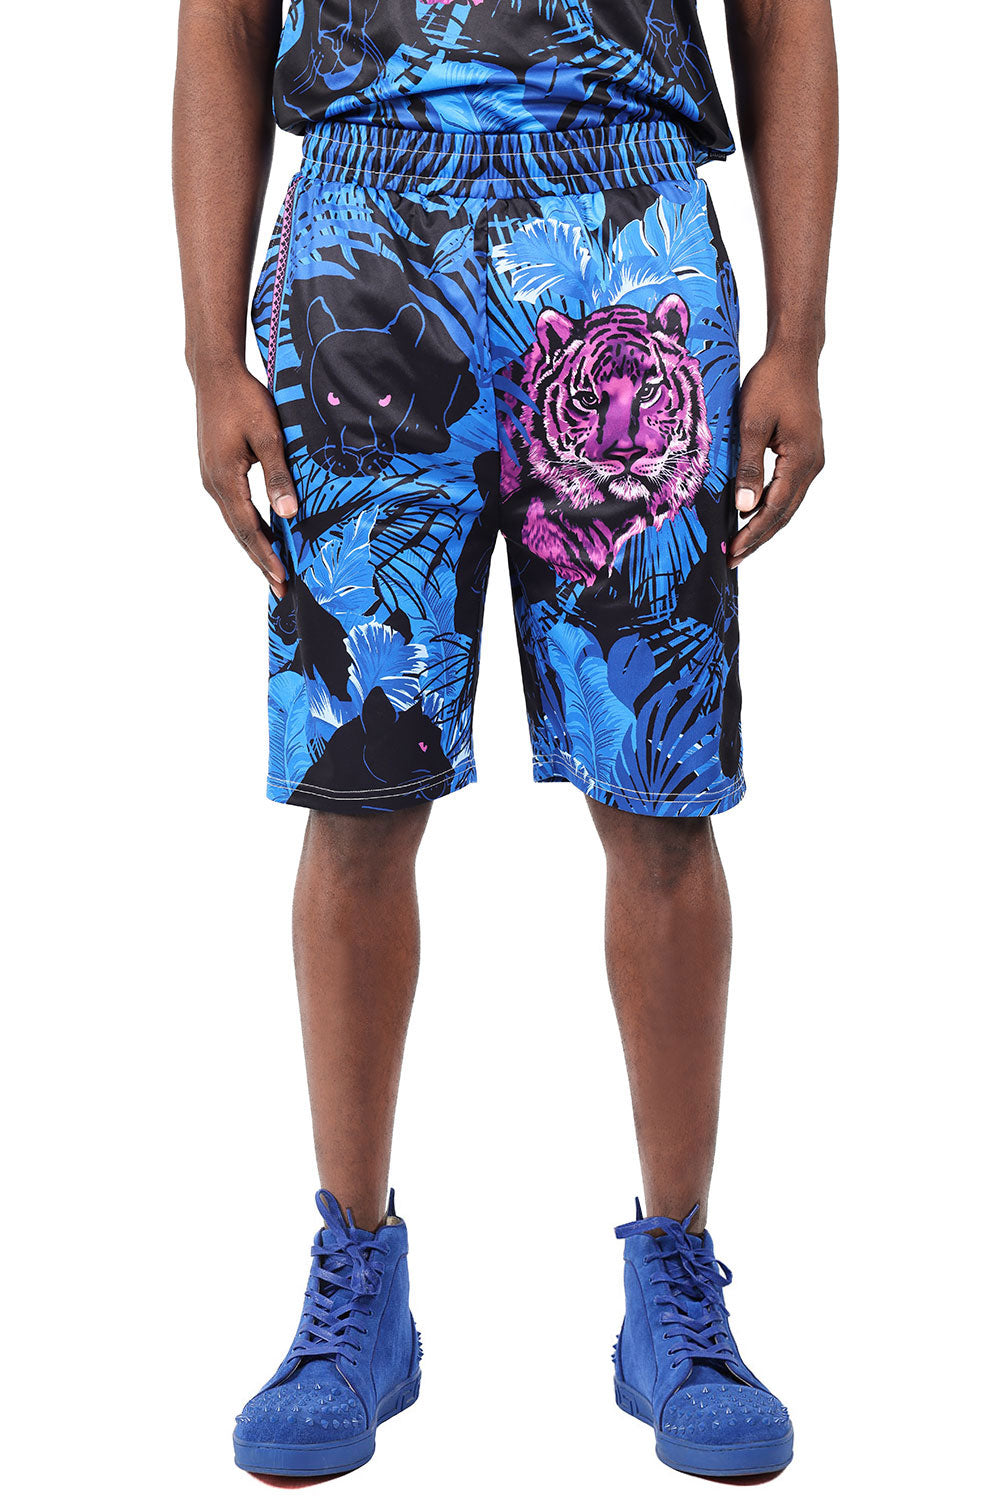 Barabas Men's Printed Tiger Floral Short Sleeve Casual Shorts 2BSP01 Navy